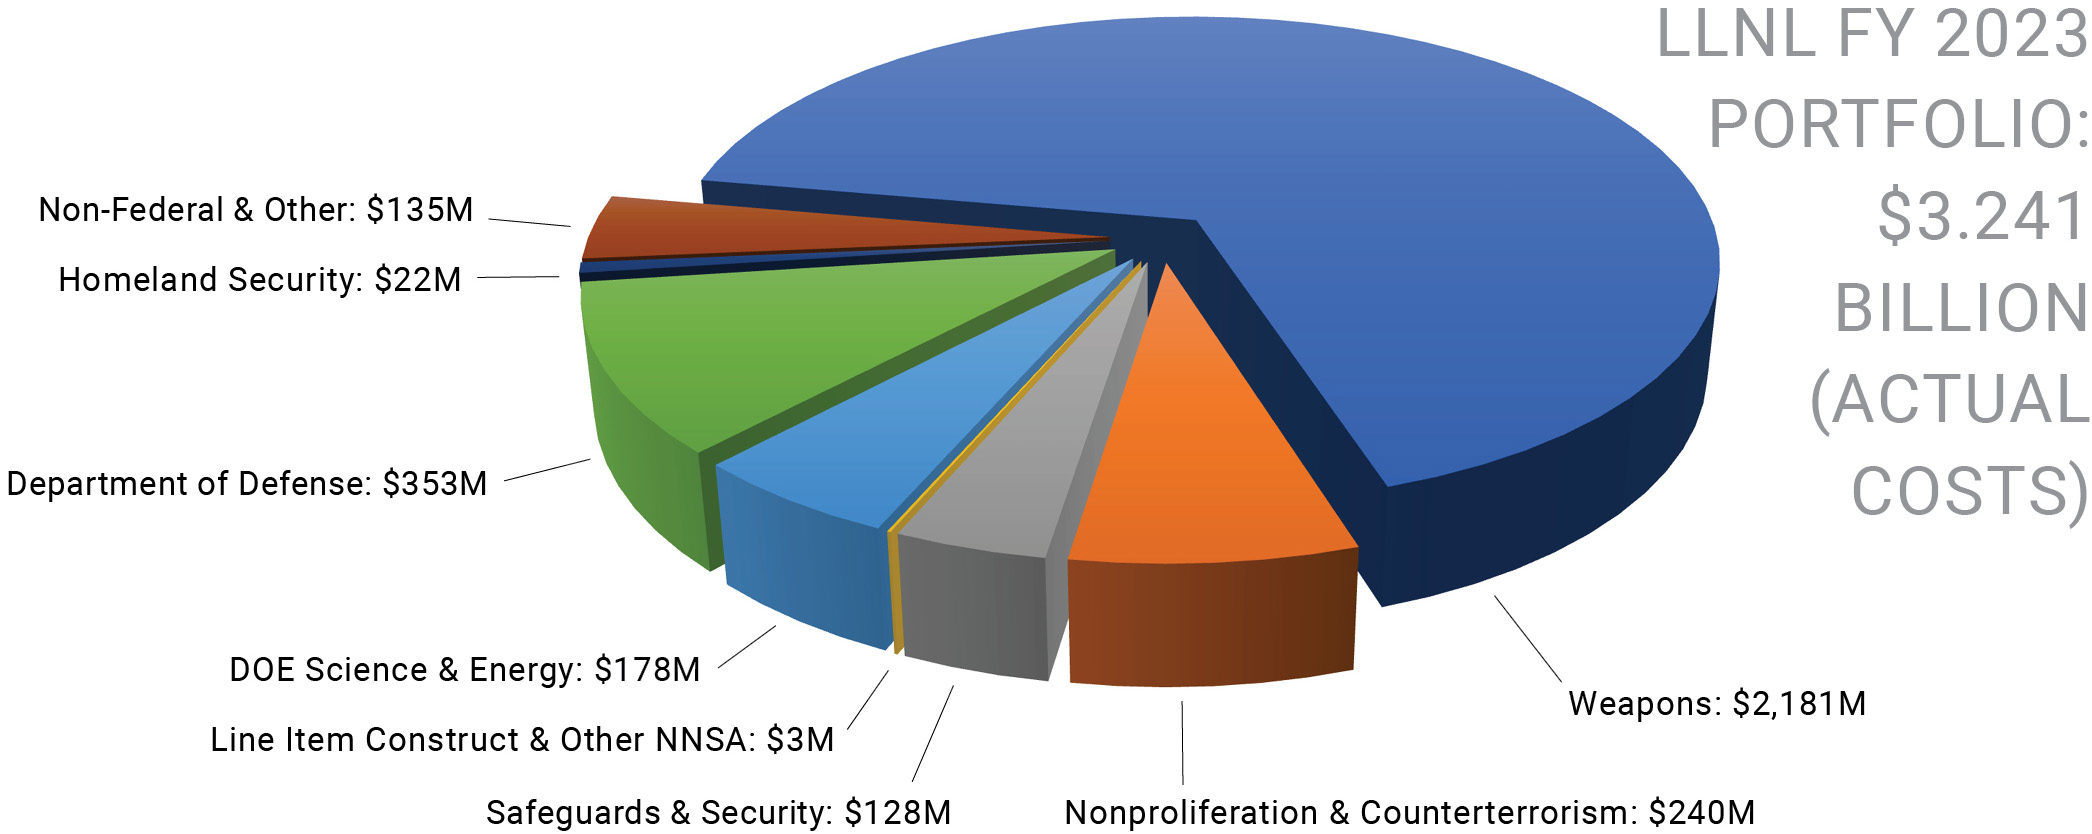 Pie chart of LLNL FY 2023 PORTFOLIO: $3.241 BILLION (ACTUAL  costS)